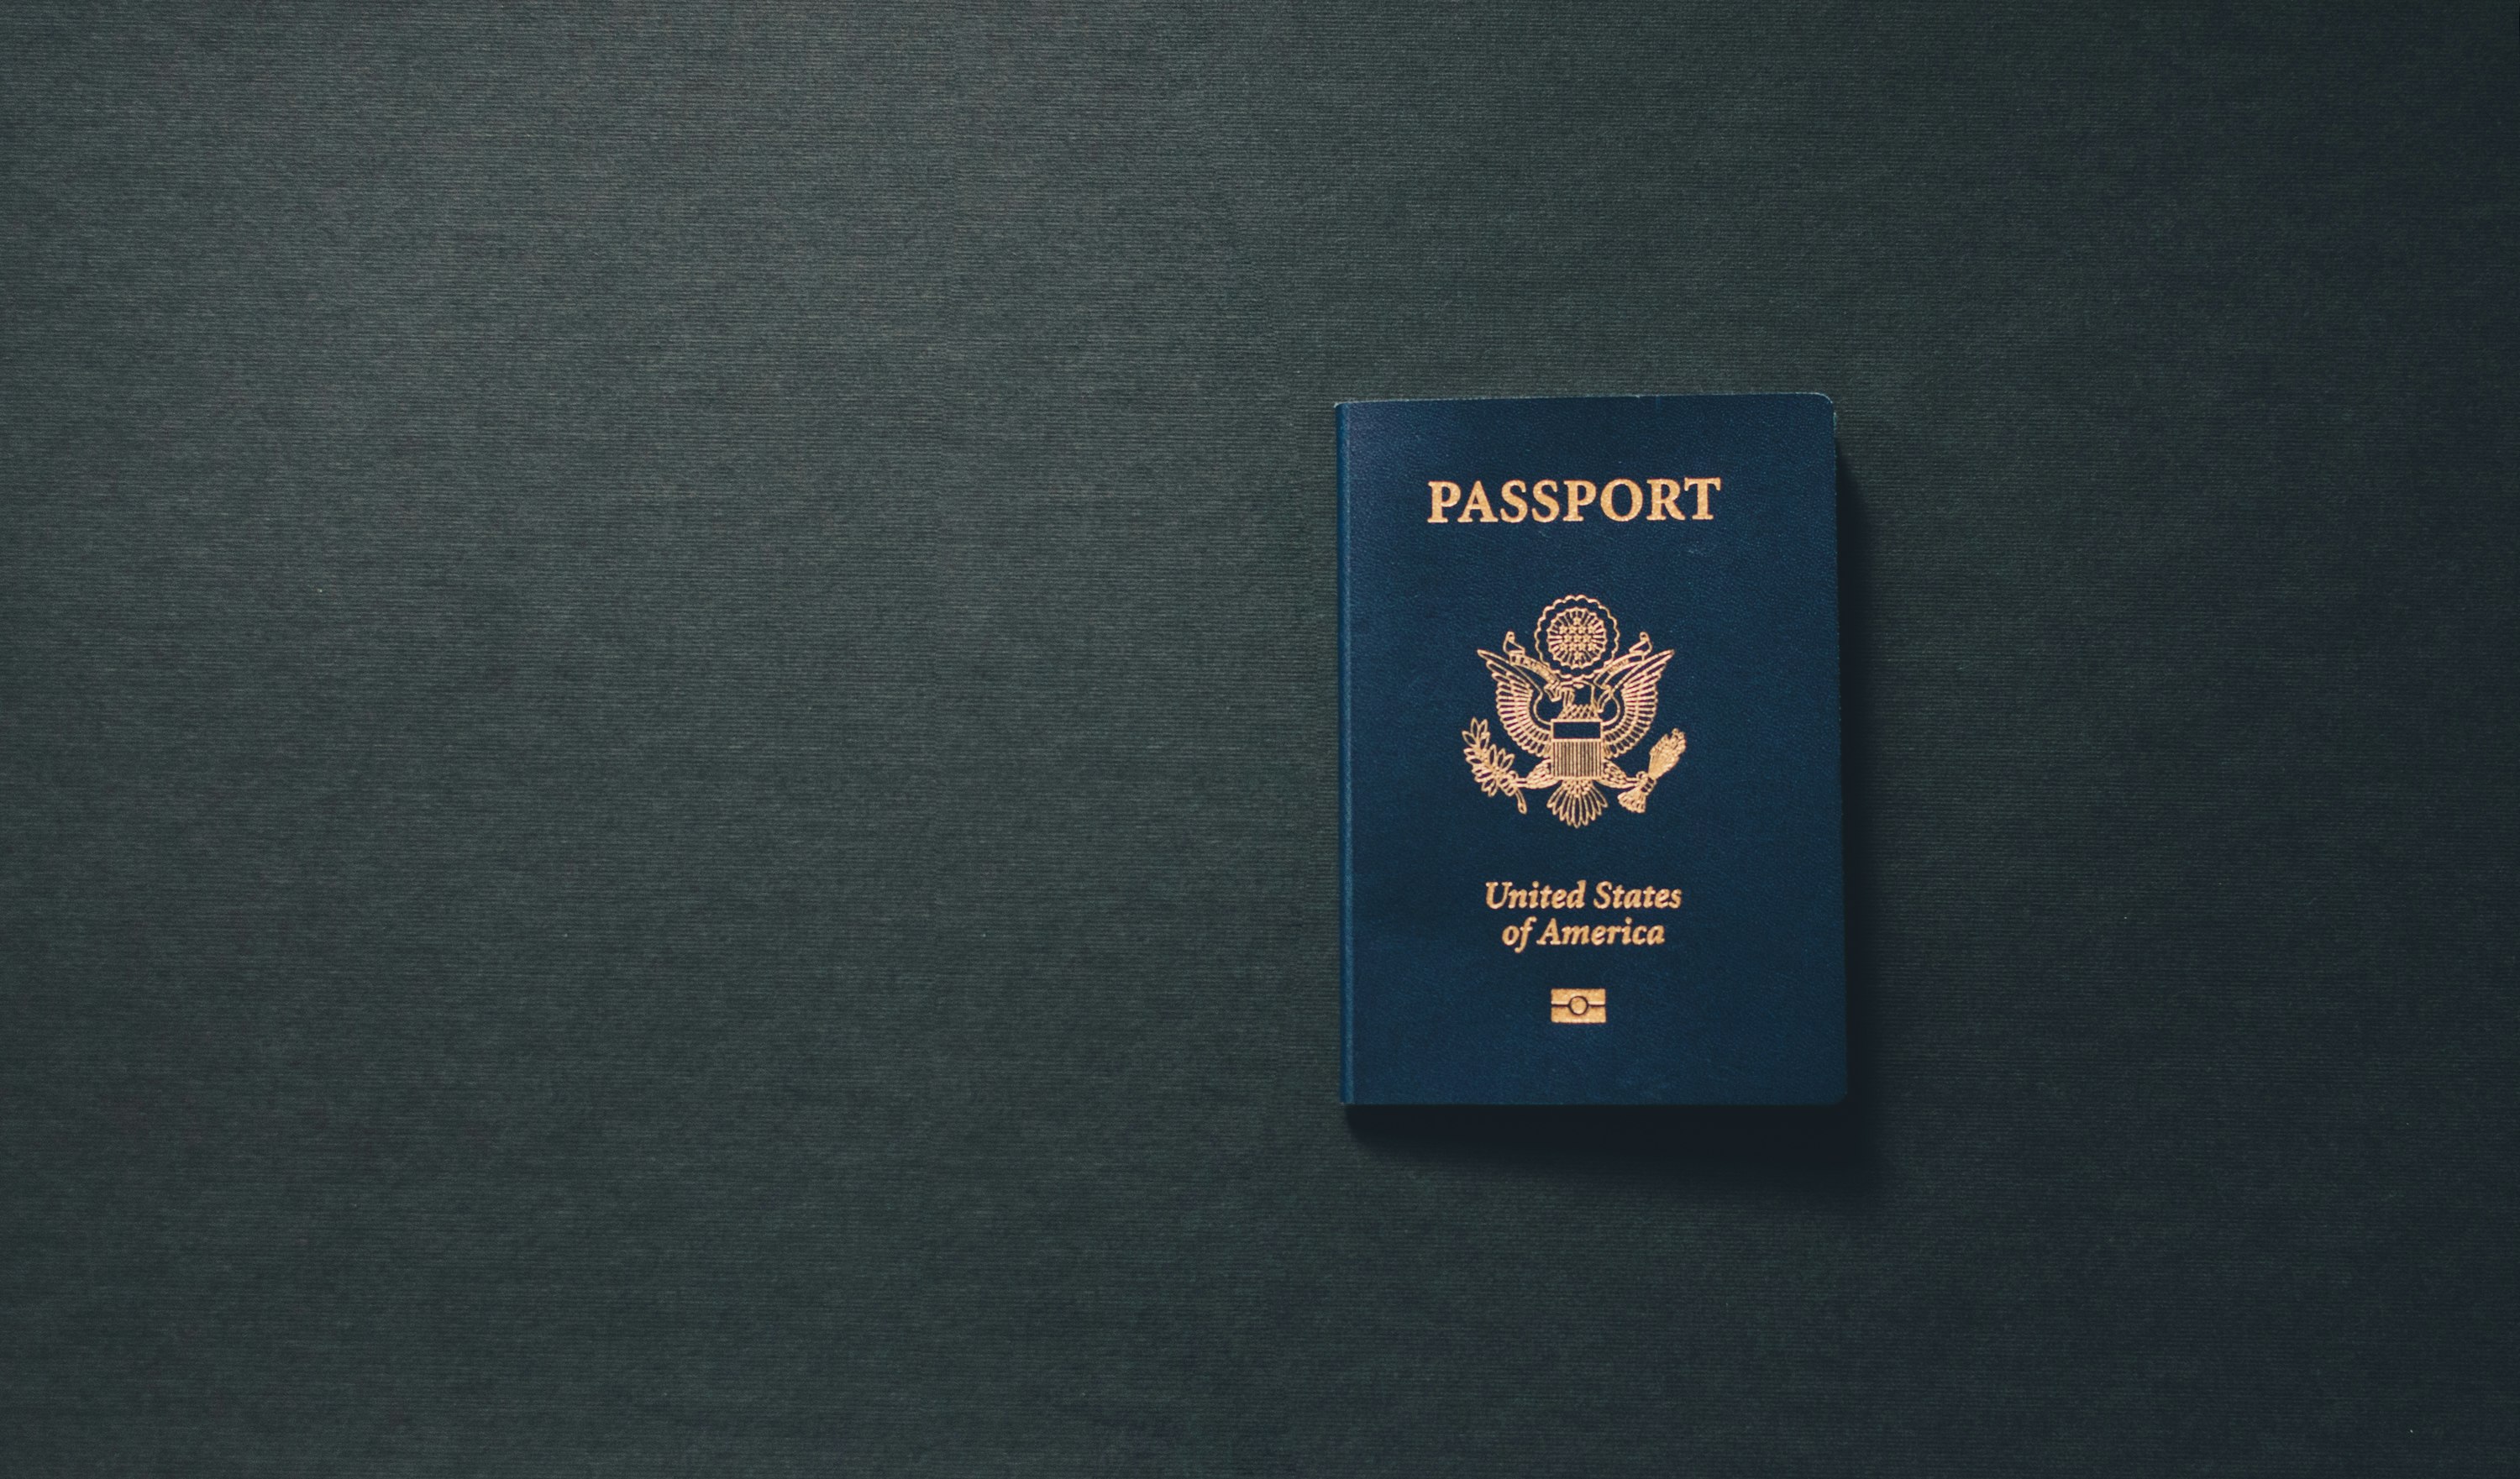 USA Passport on a Grey Background